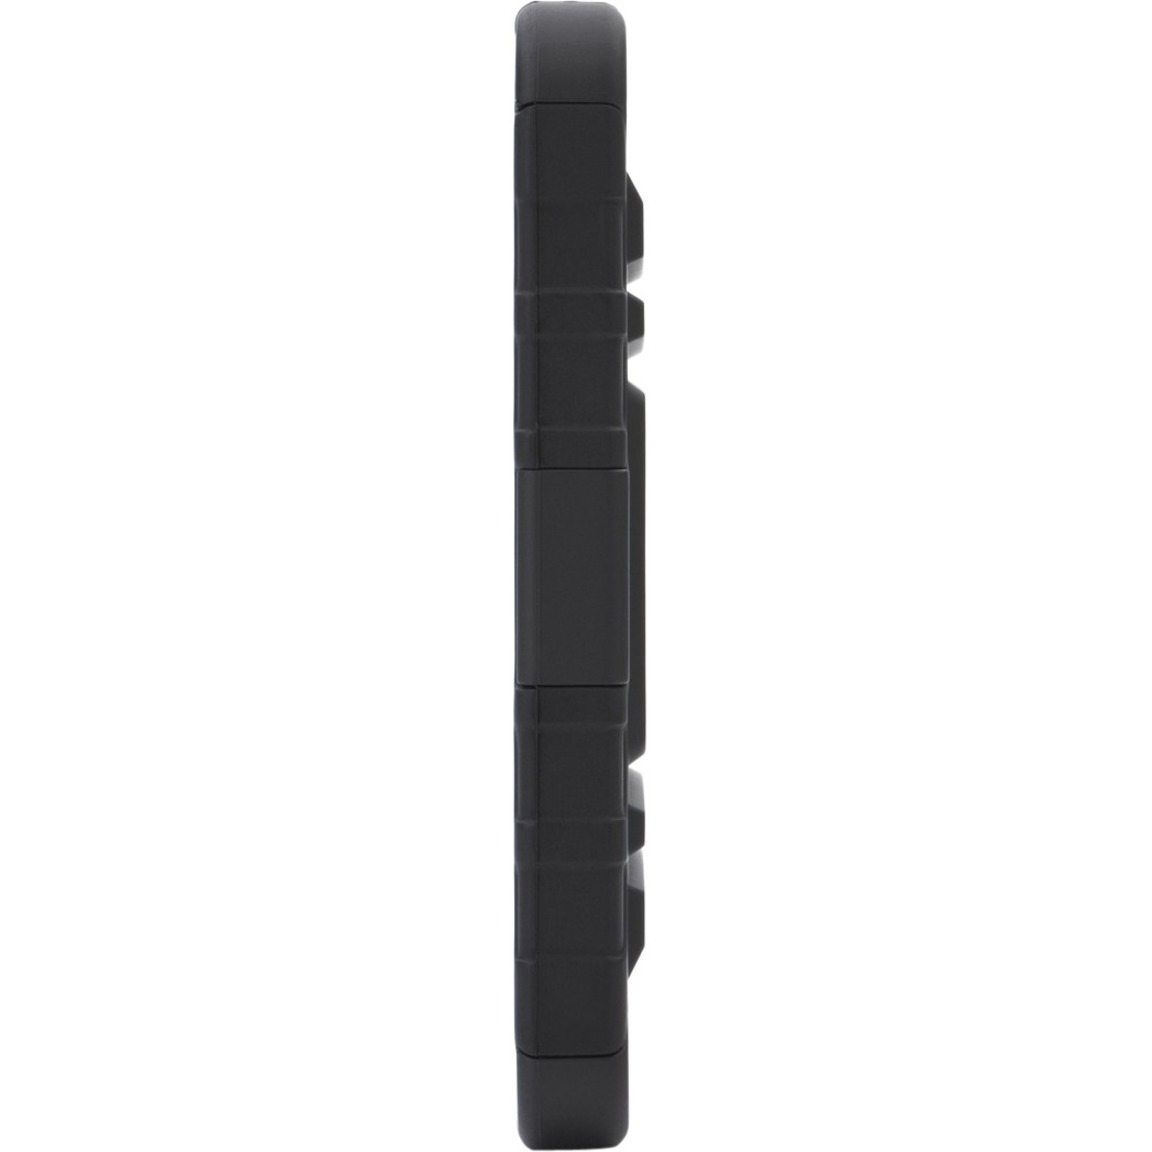 i-Blason Prime Carrying Case (Holster) Apple iPhone 5c Smartphone, Black - image 4 of 4